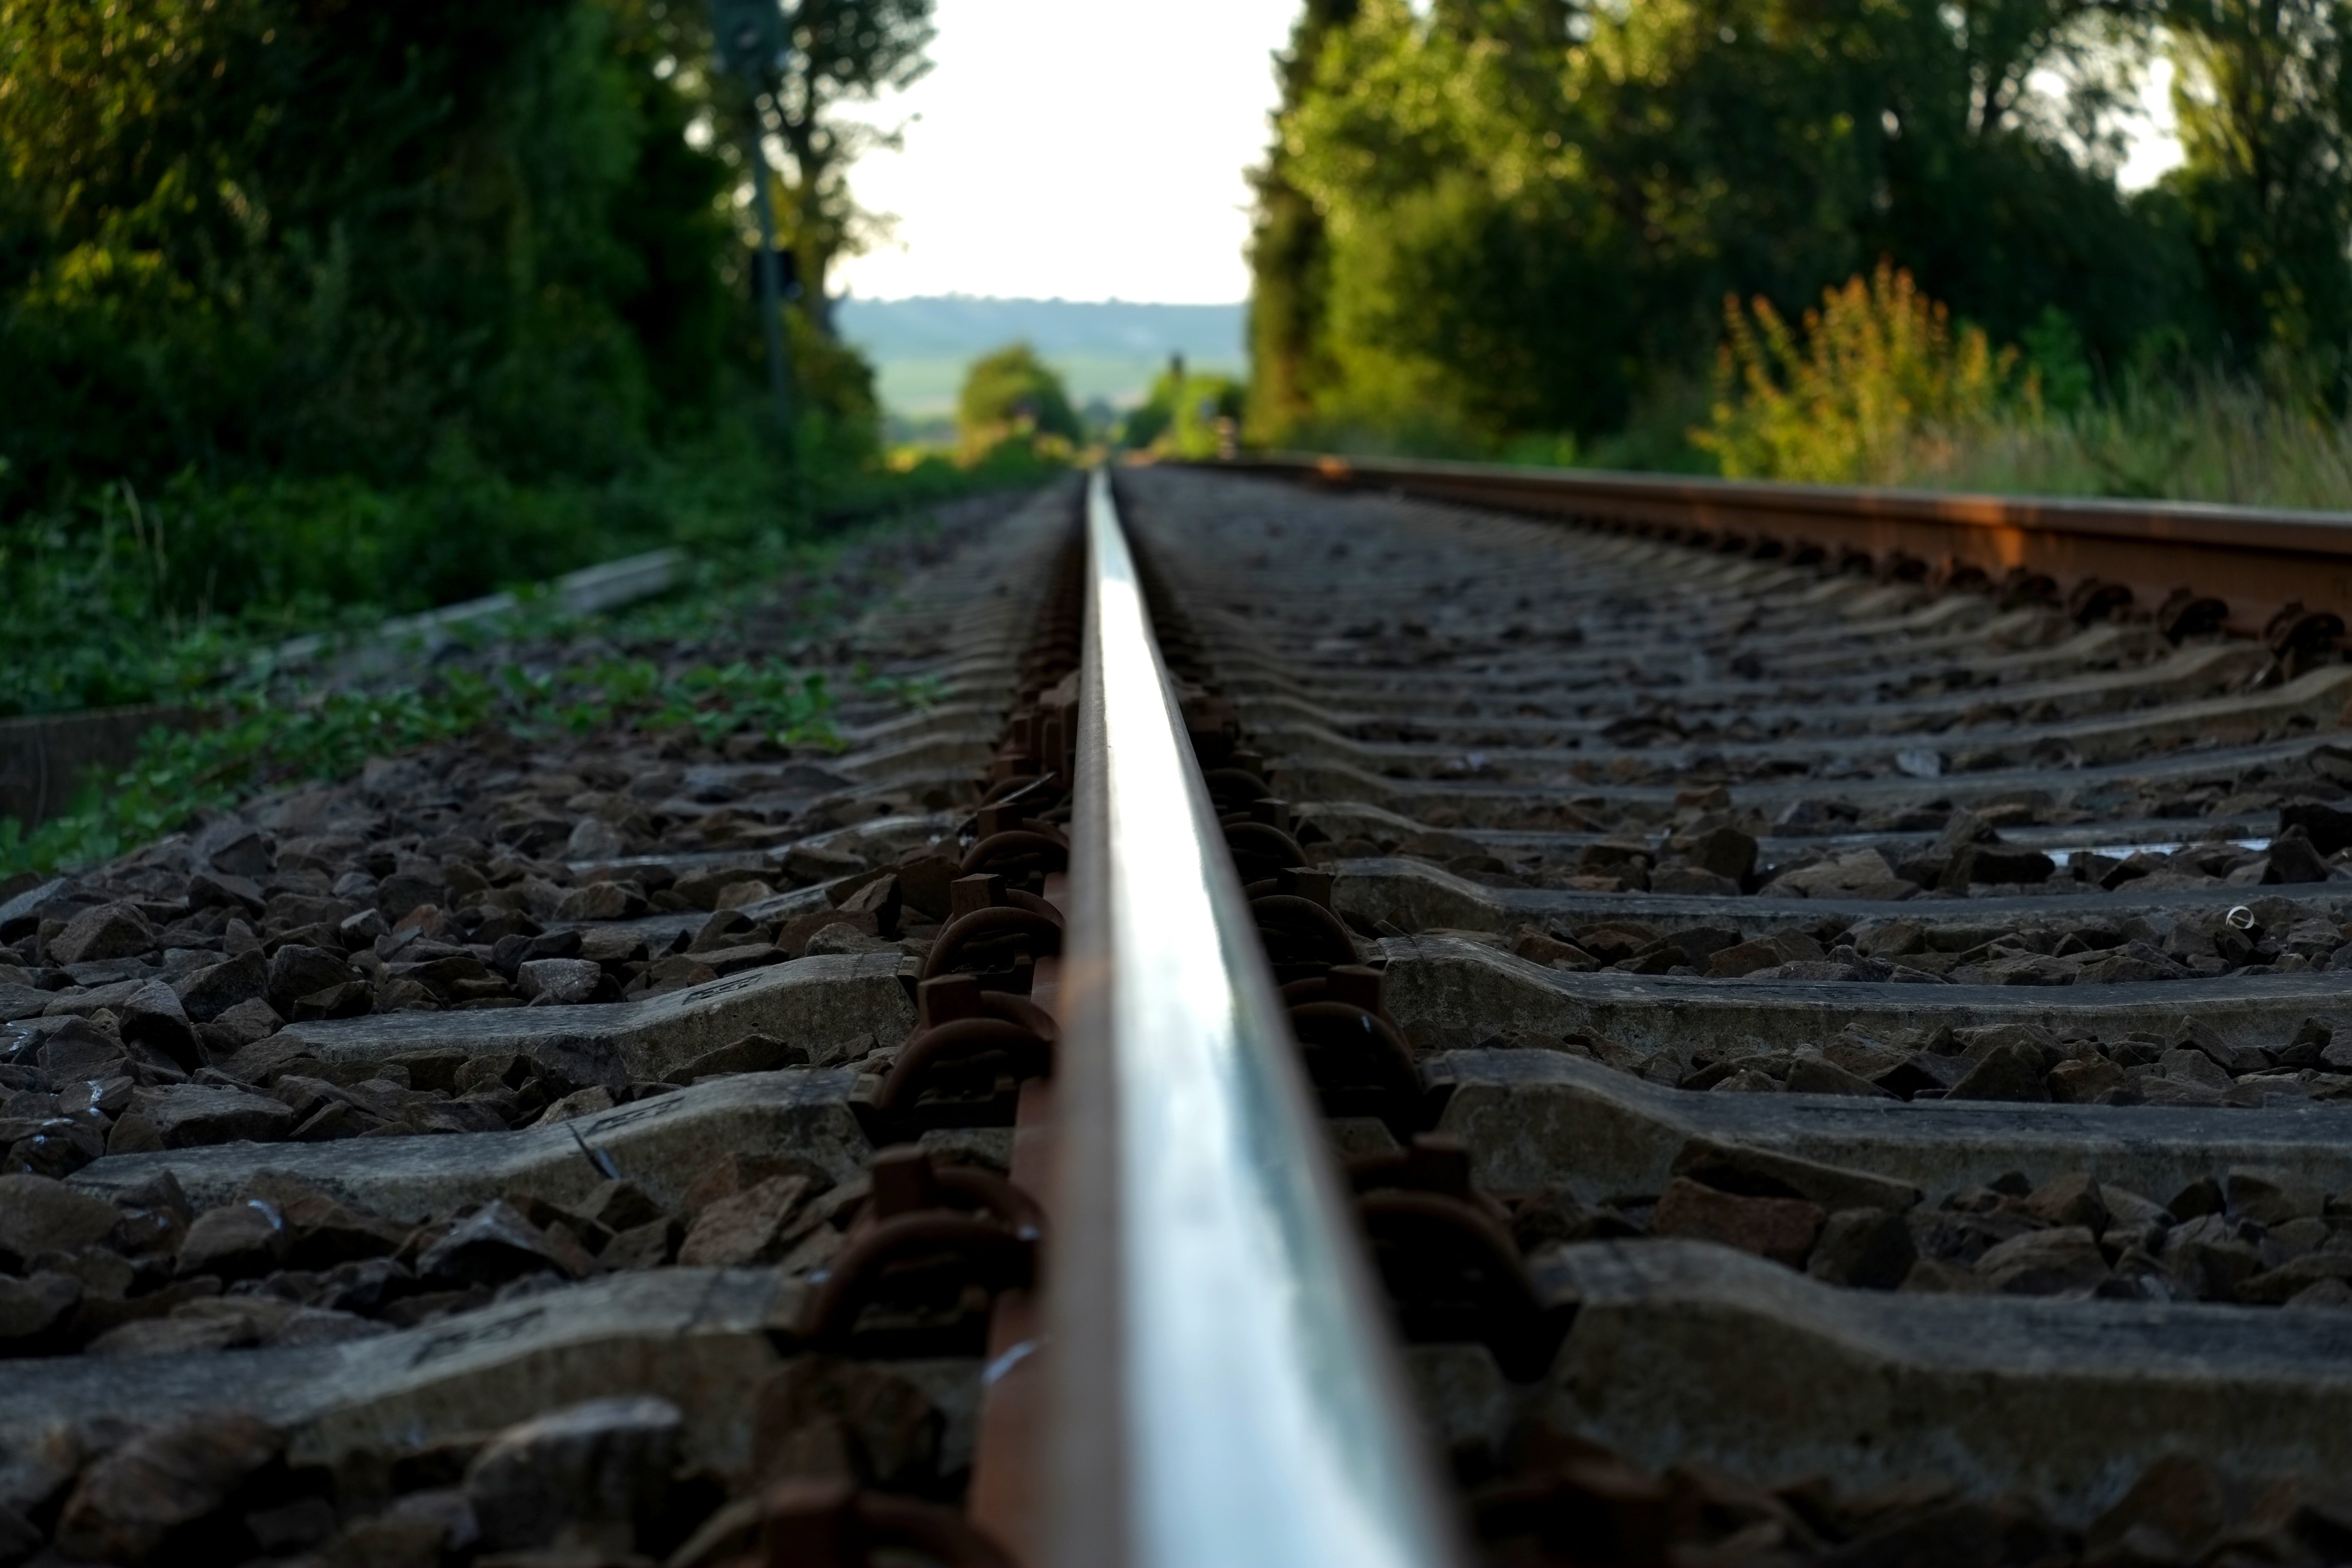 Brown Train Rail on Close Up Photo during Daytime, Blur, Railroad tracks, Vegetation, Travel, HQ Photo